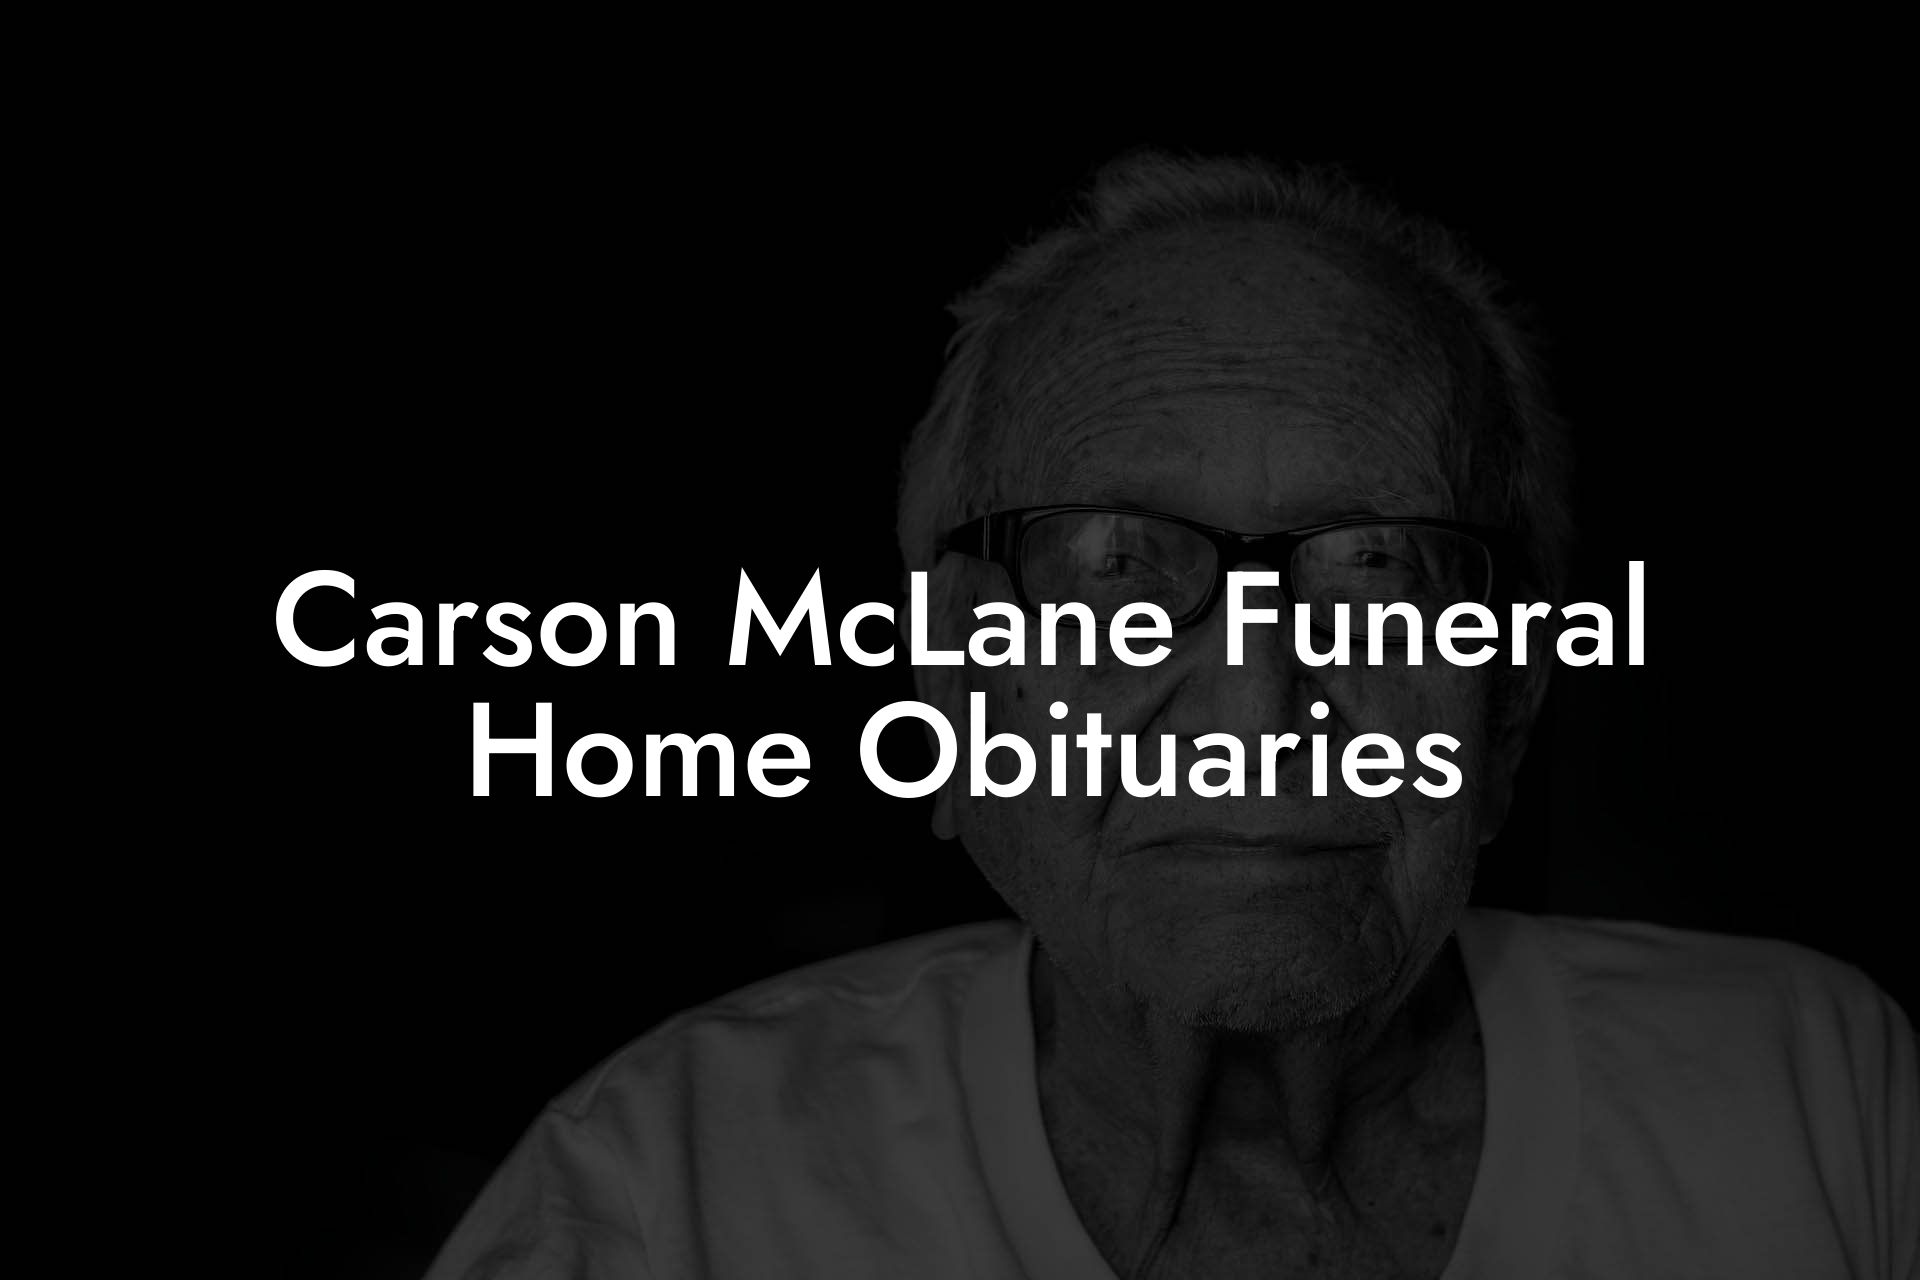 Carson McLane Funeral Home Obituaries